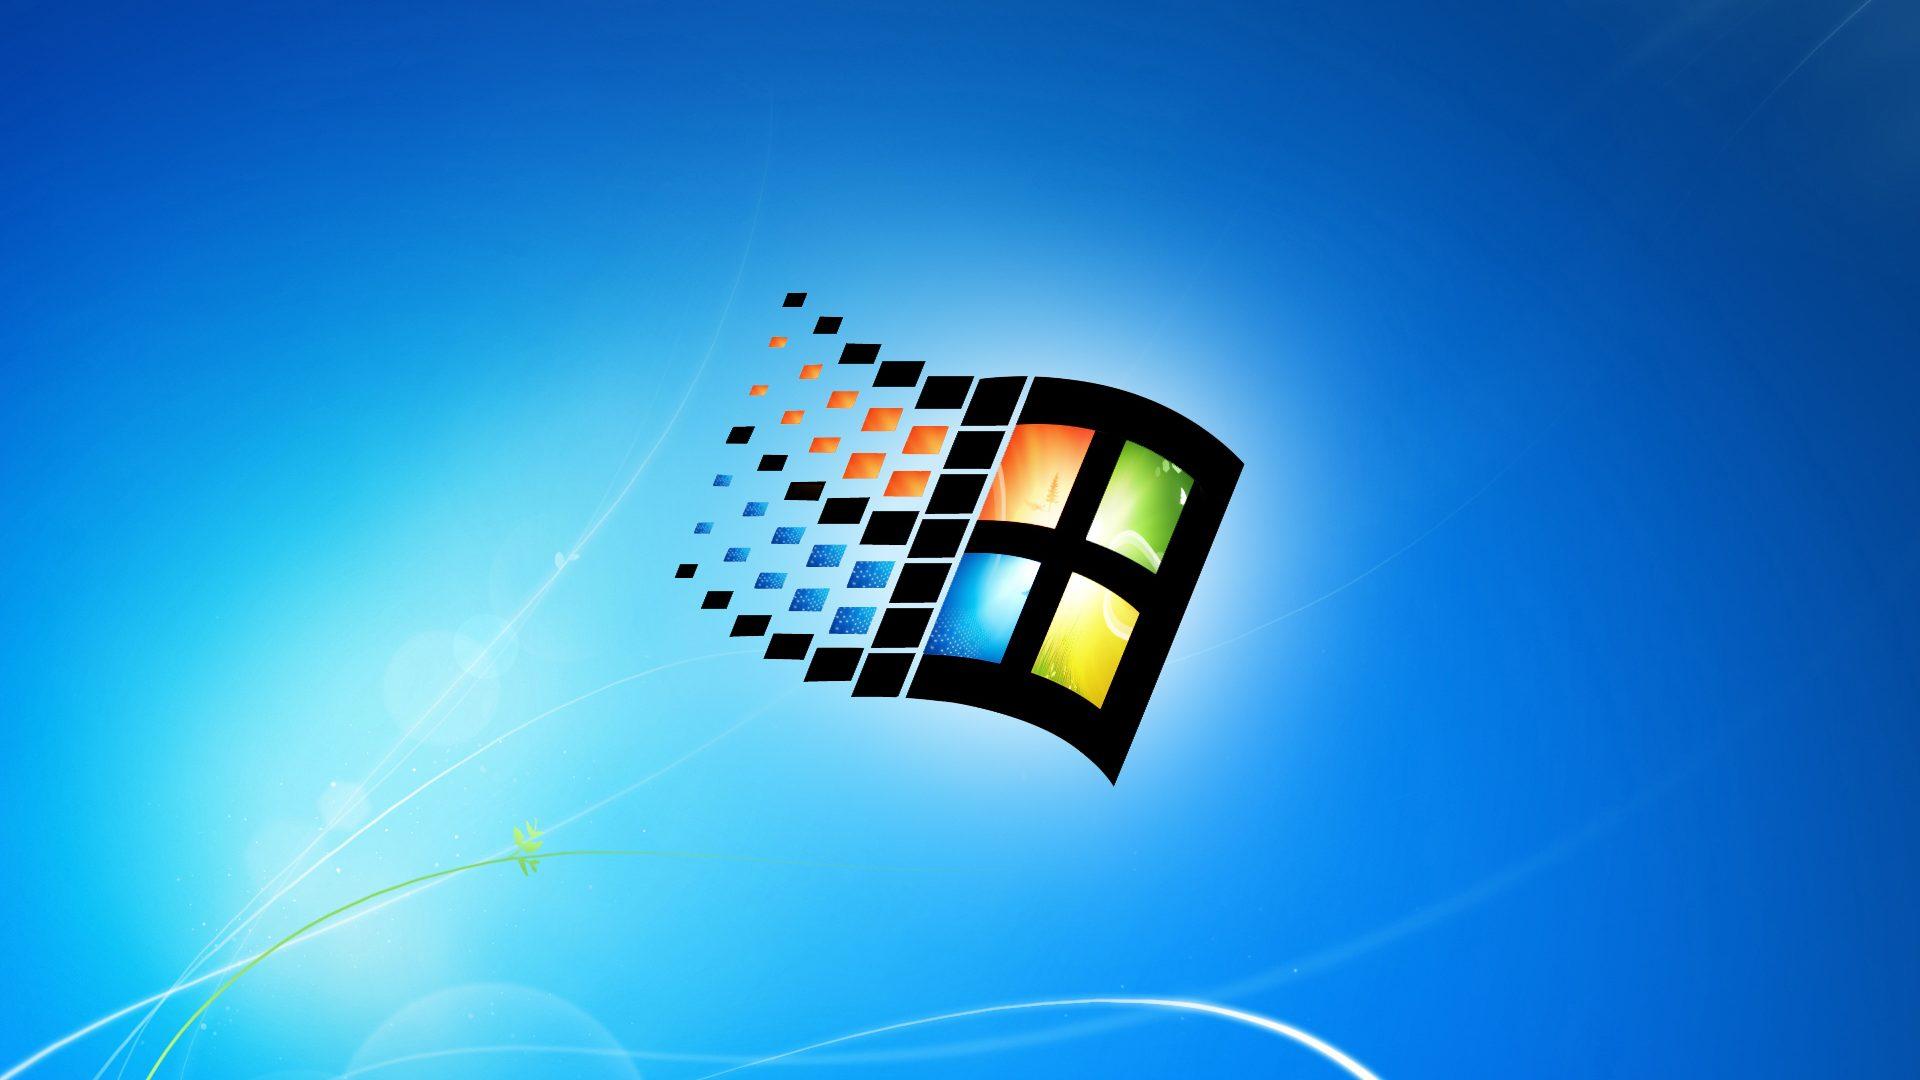 Windows 95 Logo - Classic Microsoft Windows 95 Logo Wallpaper | PaperPull